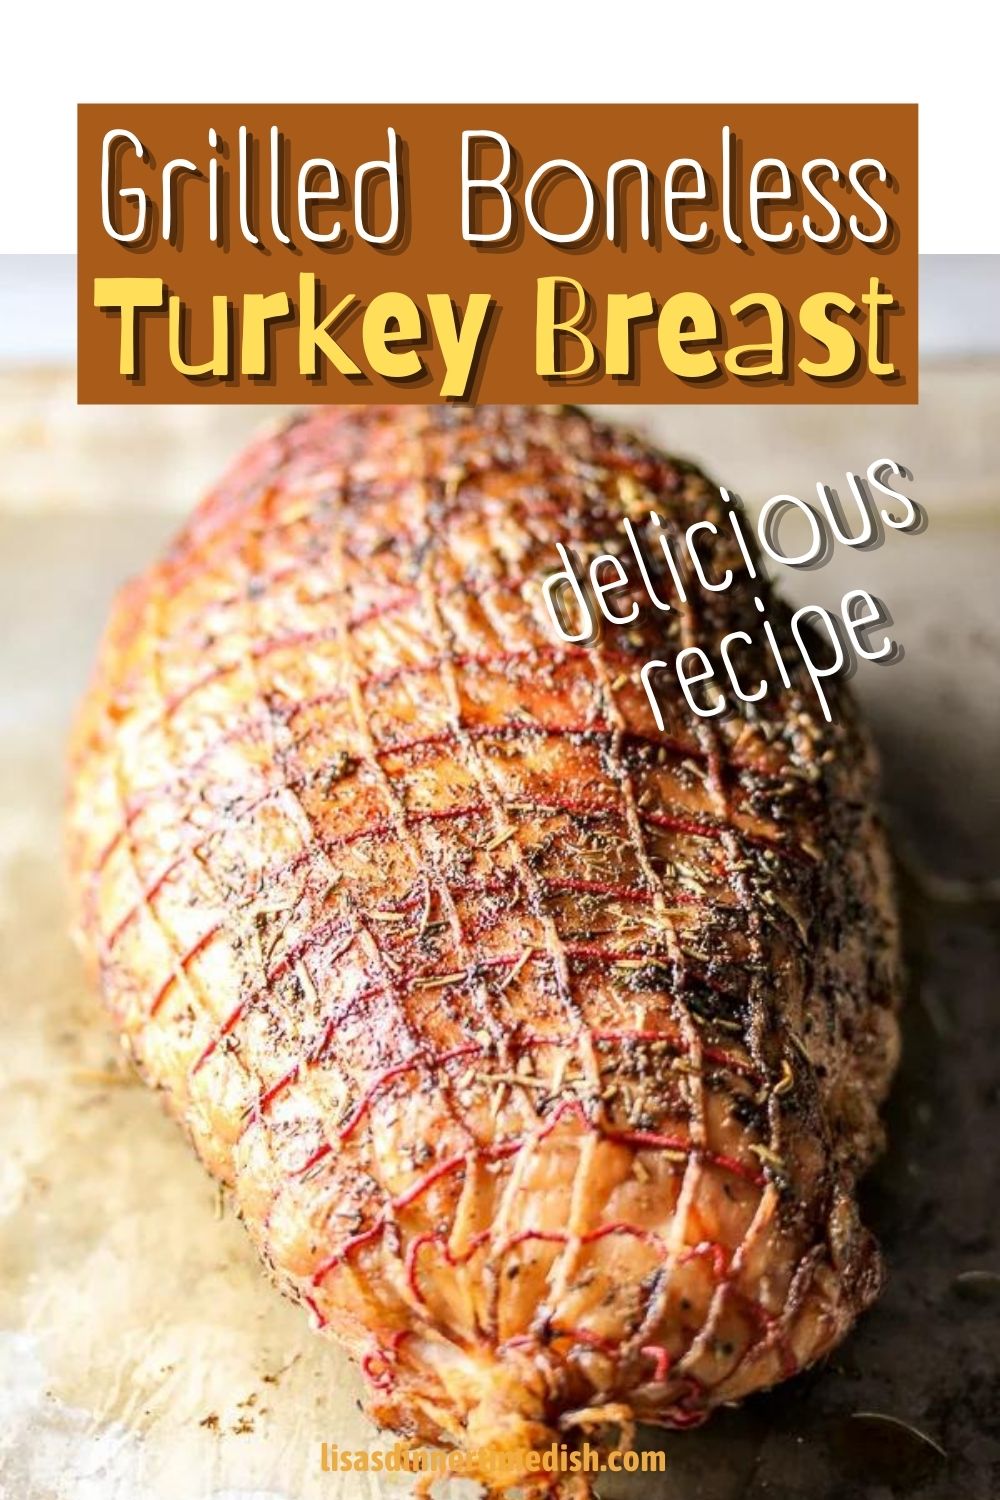 Grilled Boneless Turkey Breast Recipe